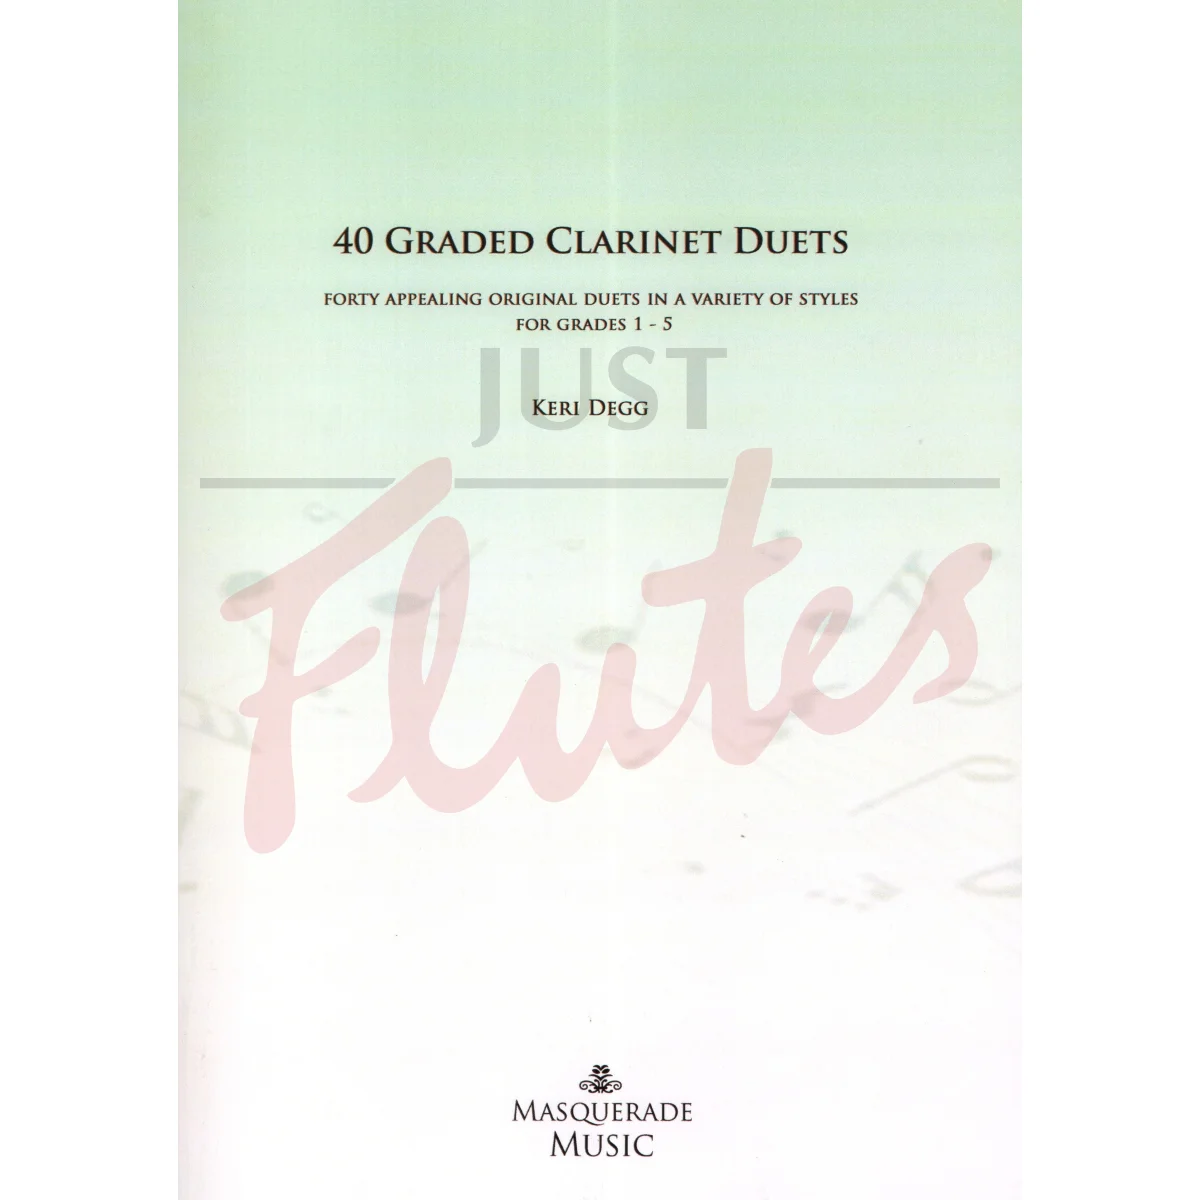 40 Graded Clarinet Duets